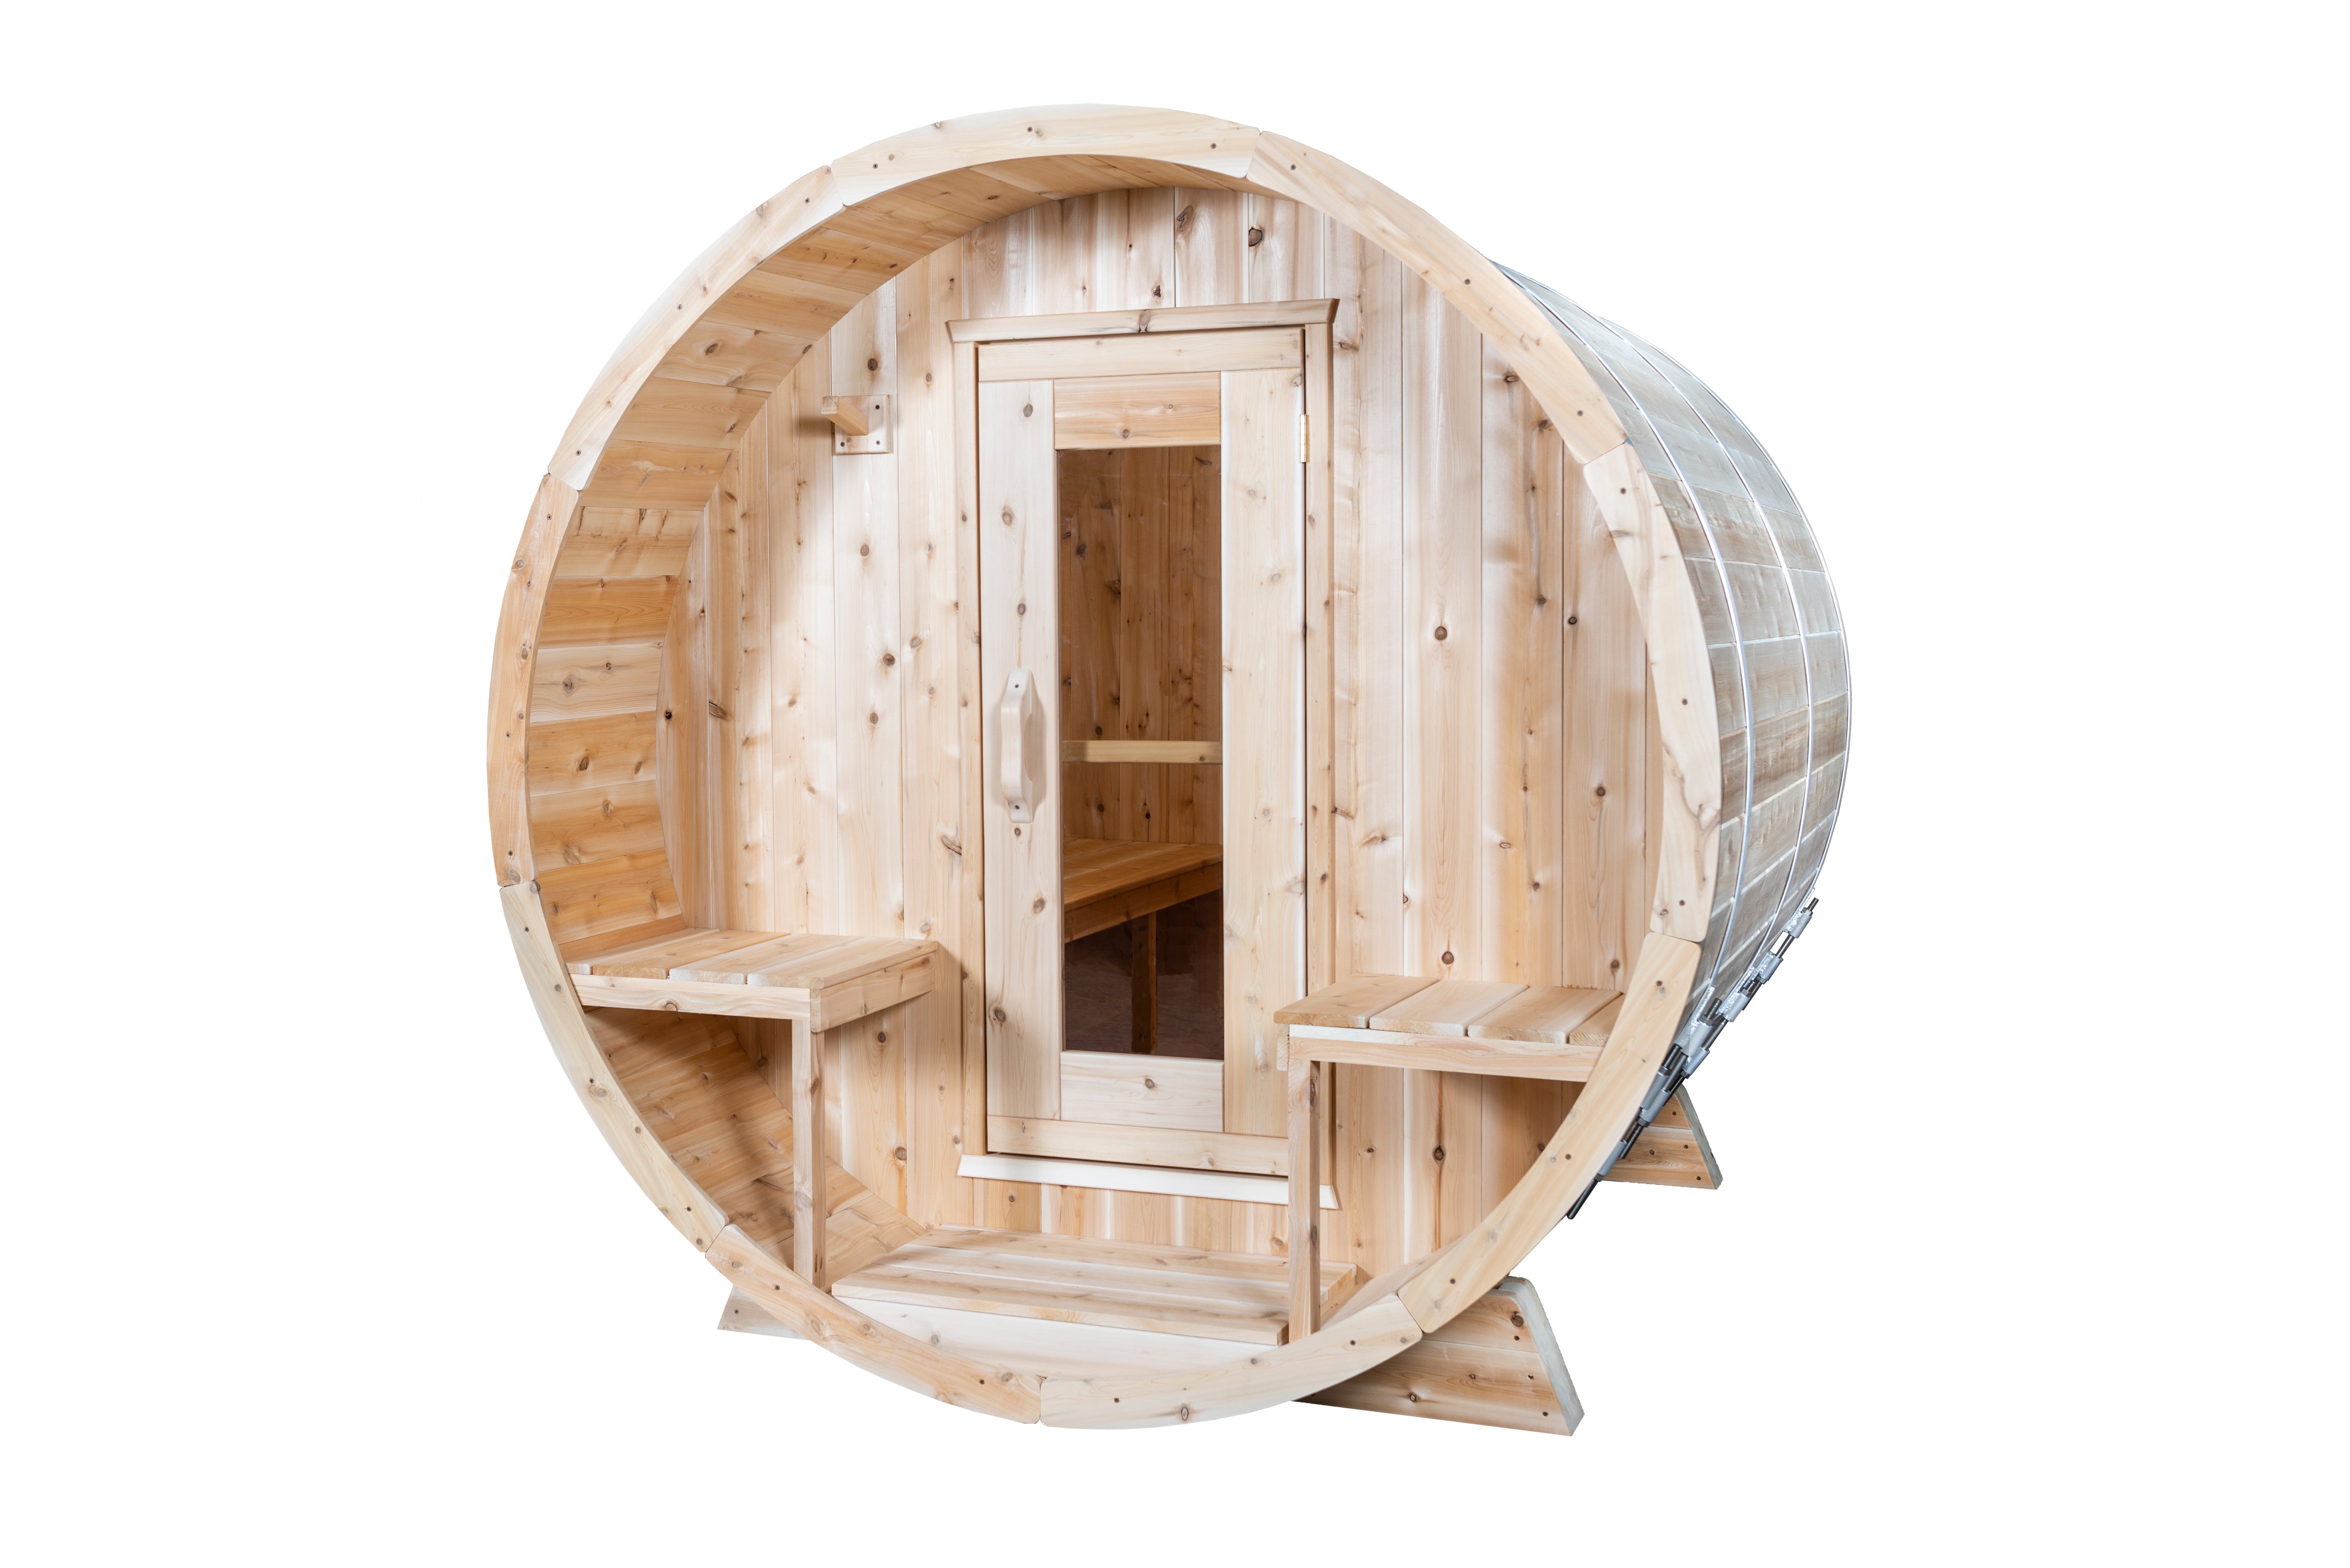 Dundalk Leisurecraft Serenity Barrel Sauna